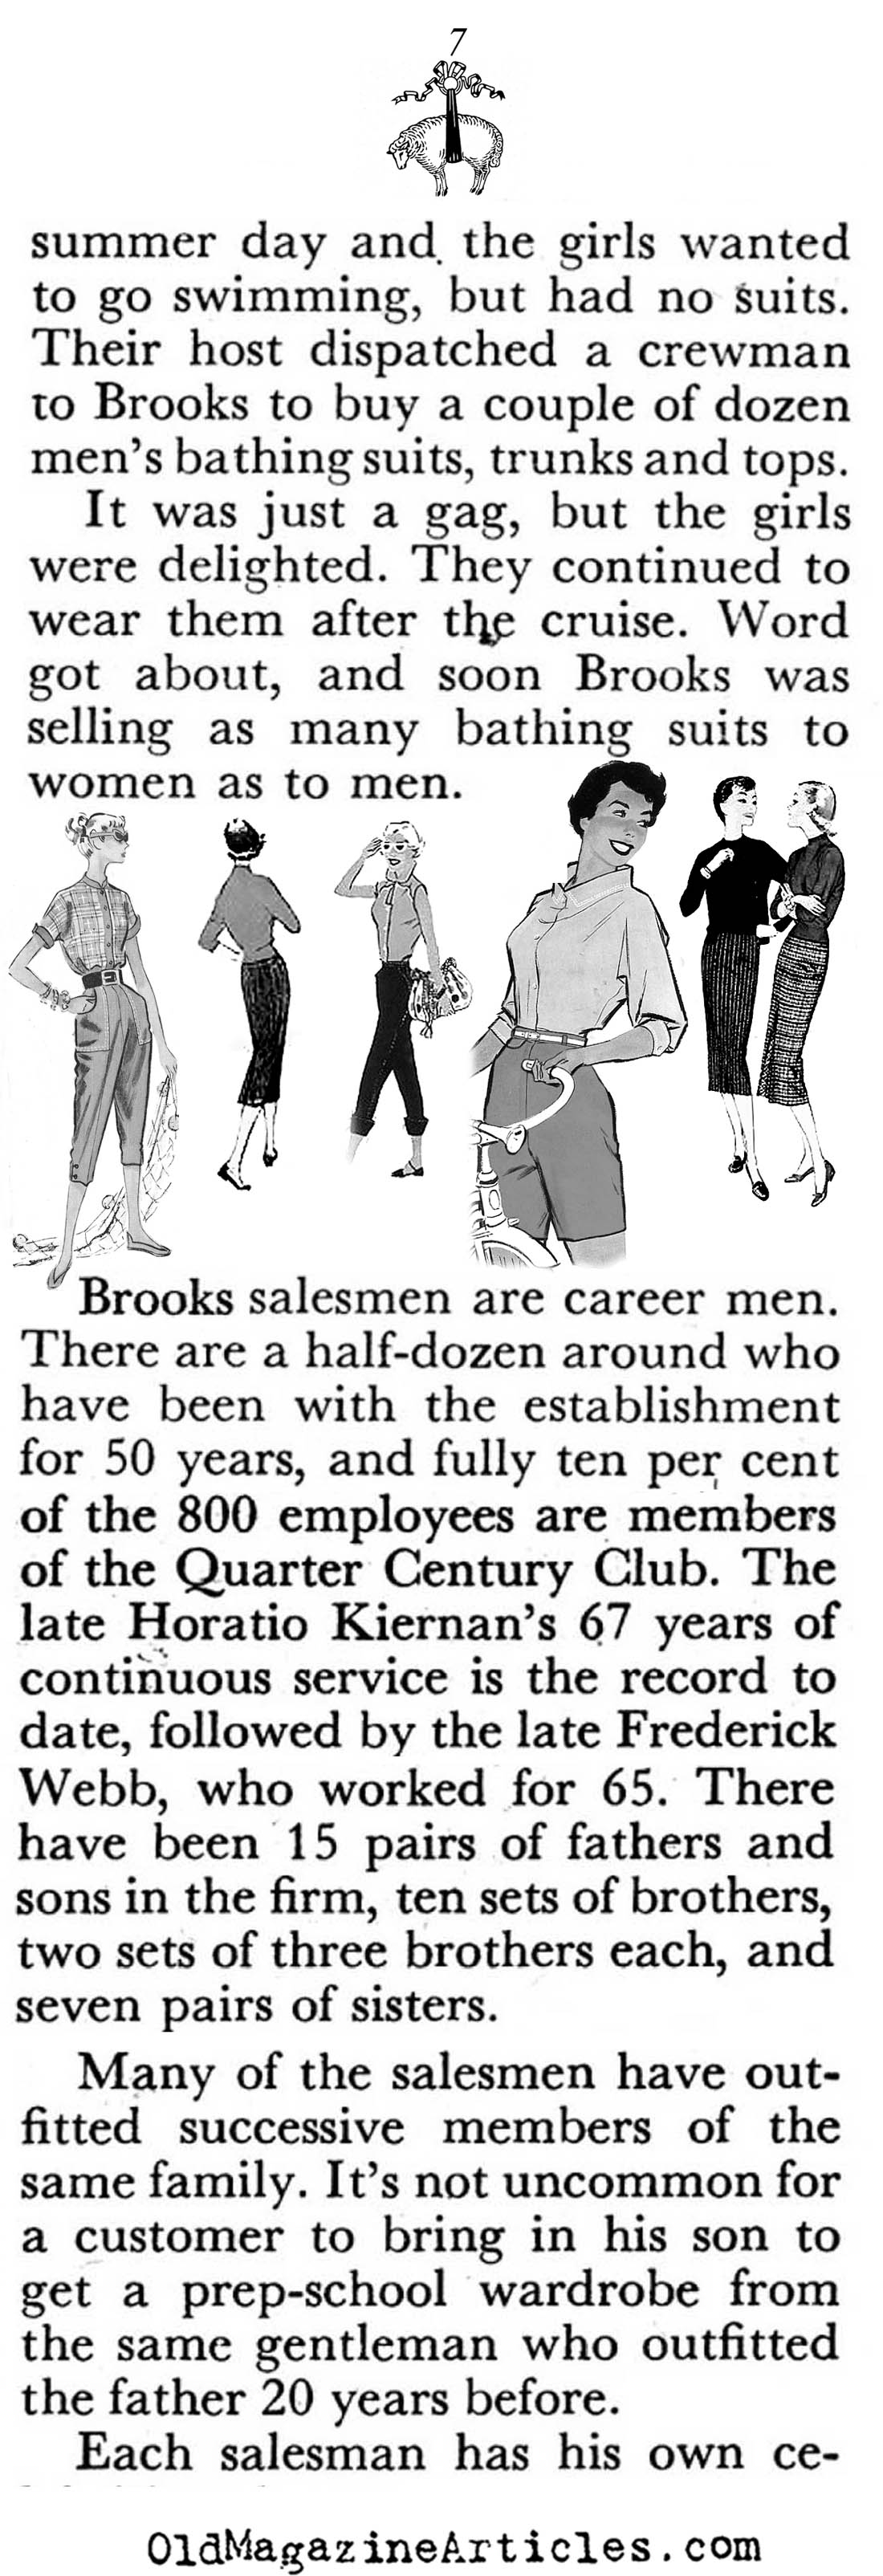 A History of Brooks Brothers (Coronet Magazine, 1950)